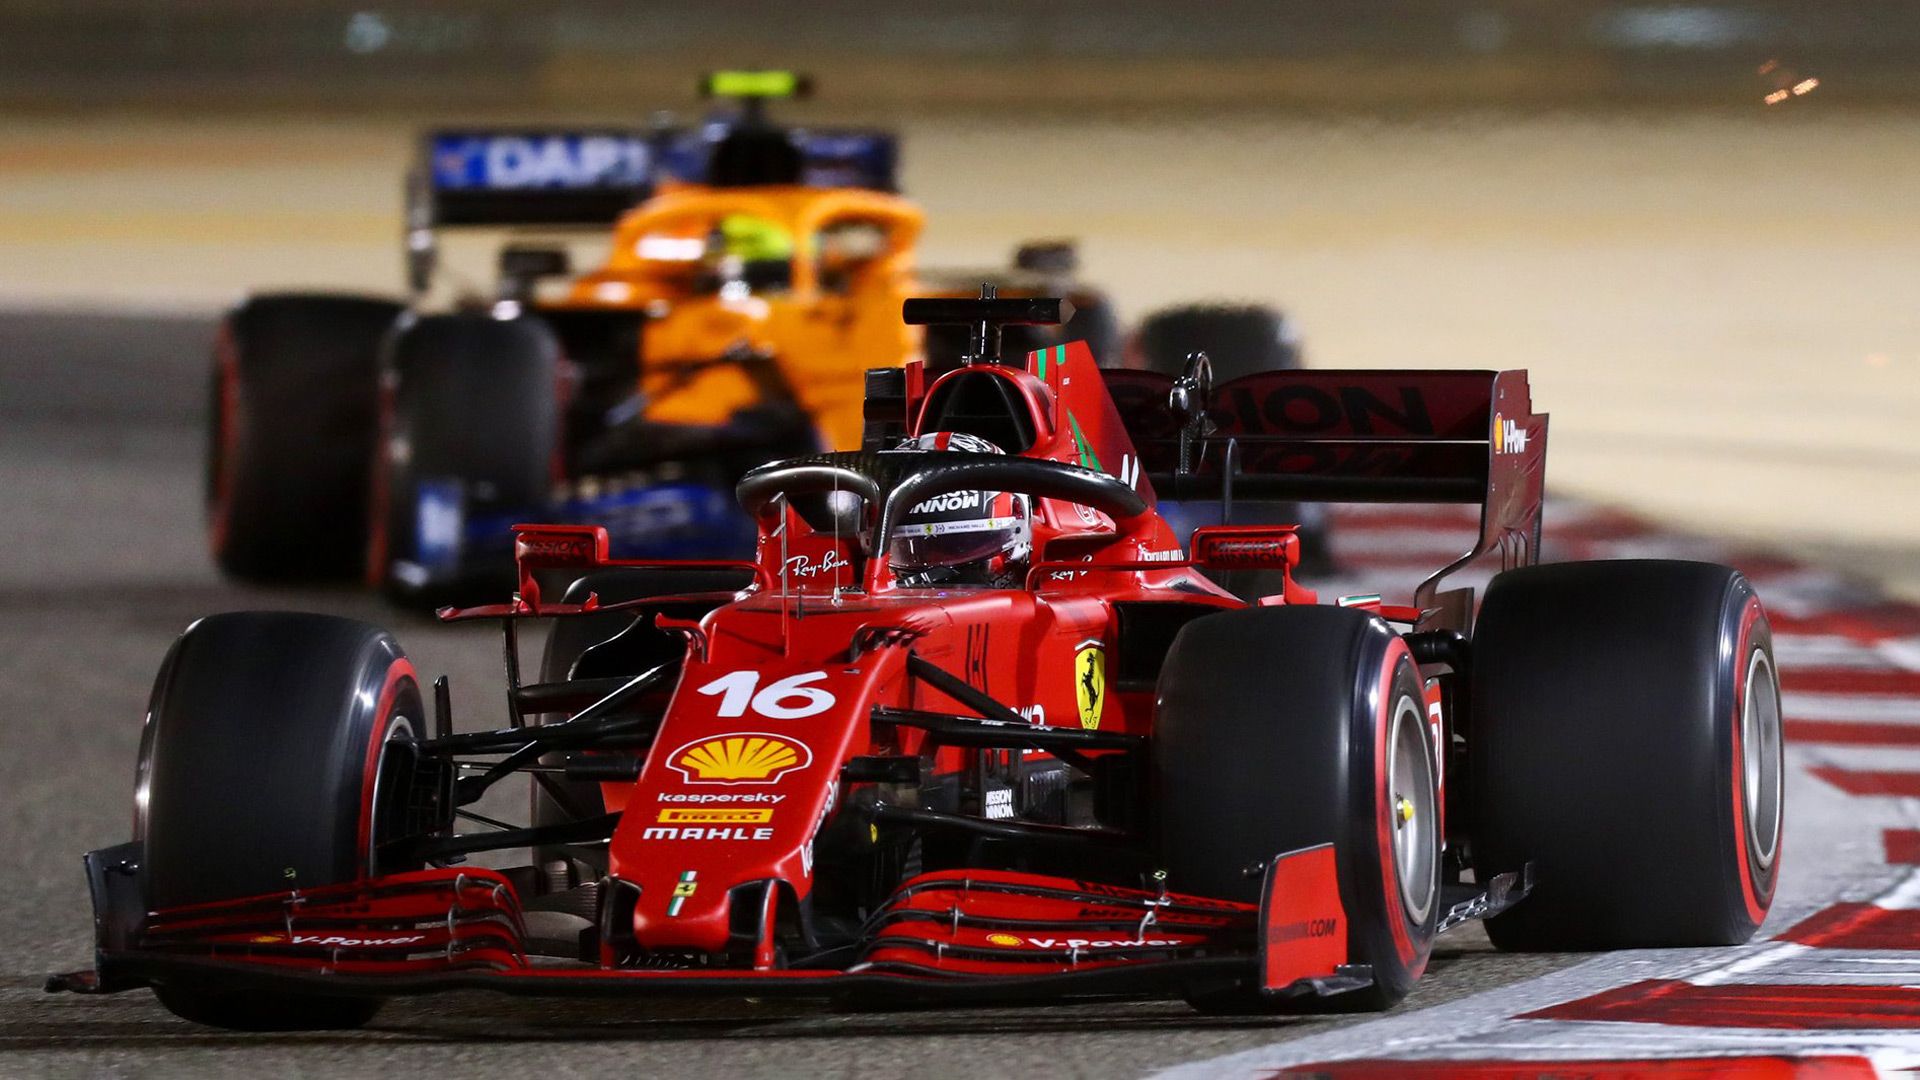 Emilia Romagna Grand Prix: Leclerc calls P3 in constructors 'reachable' for Ferrari in 2021